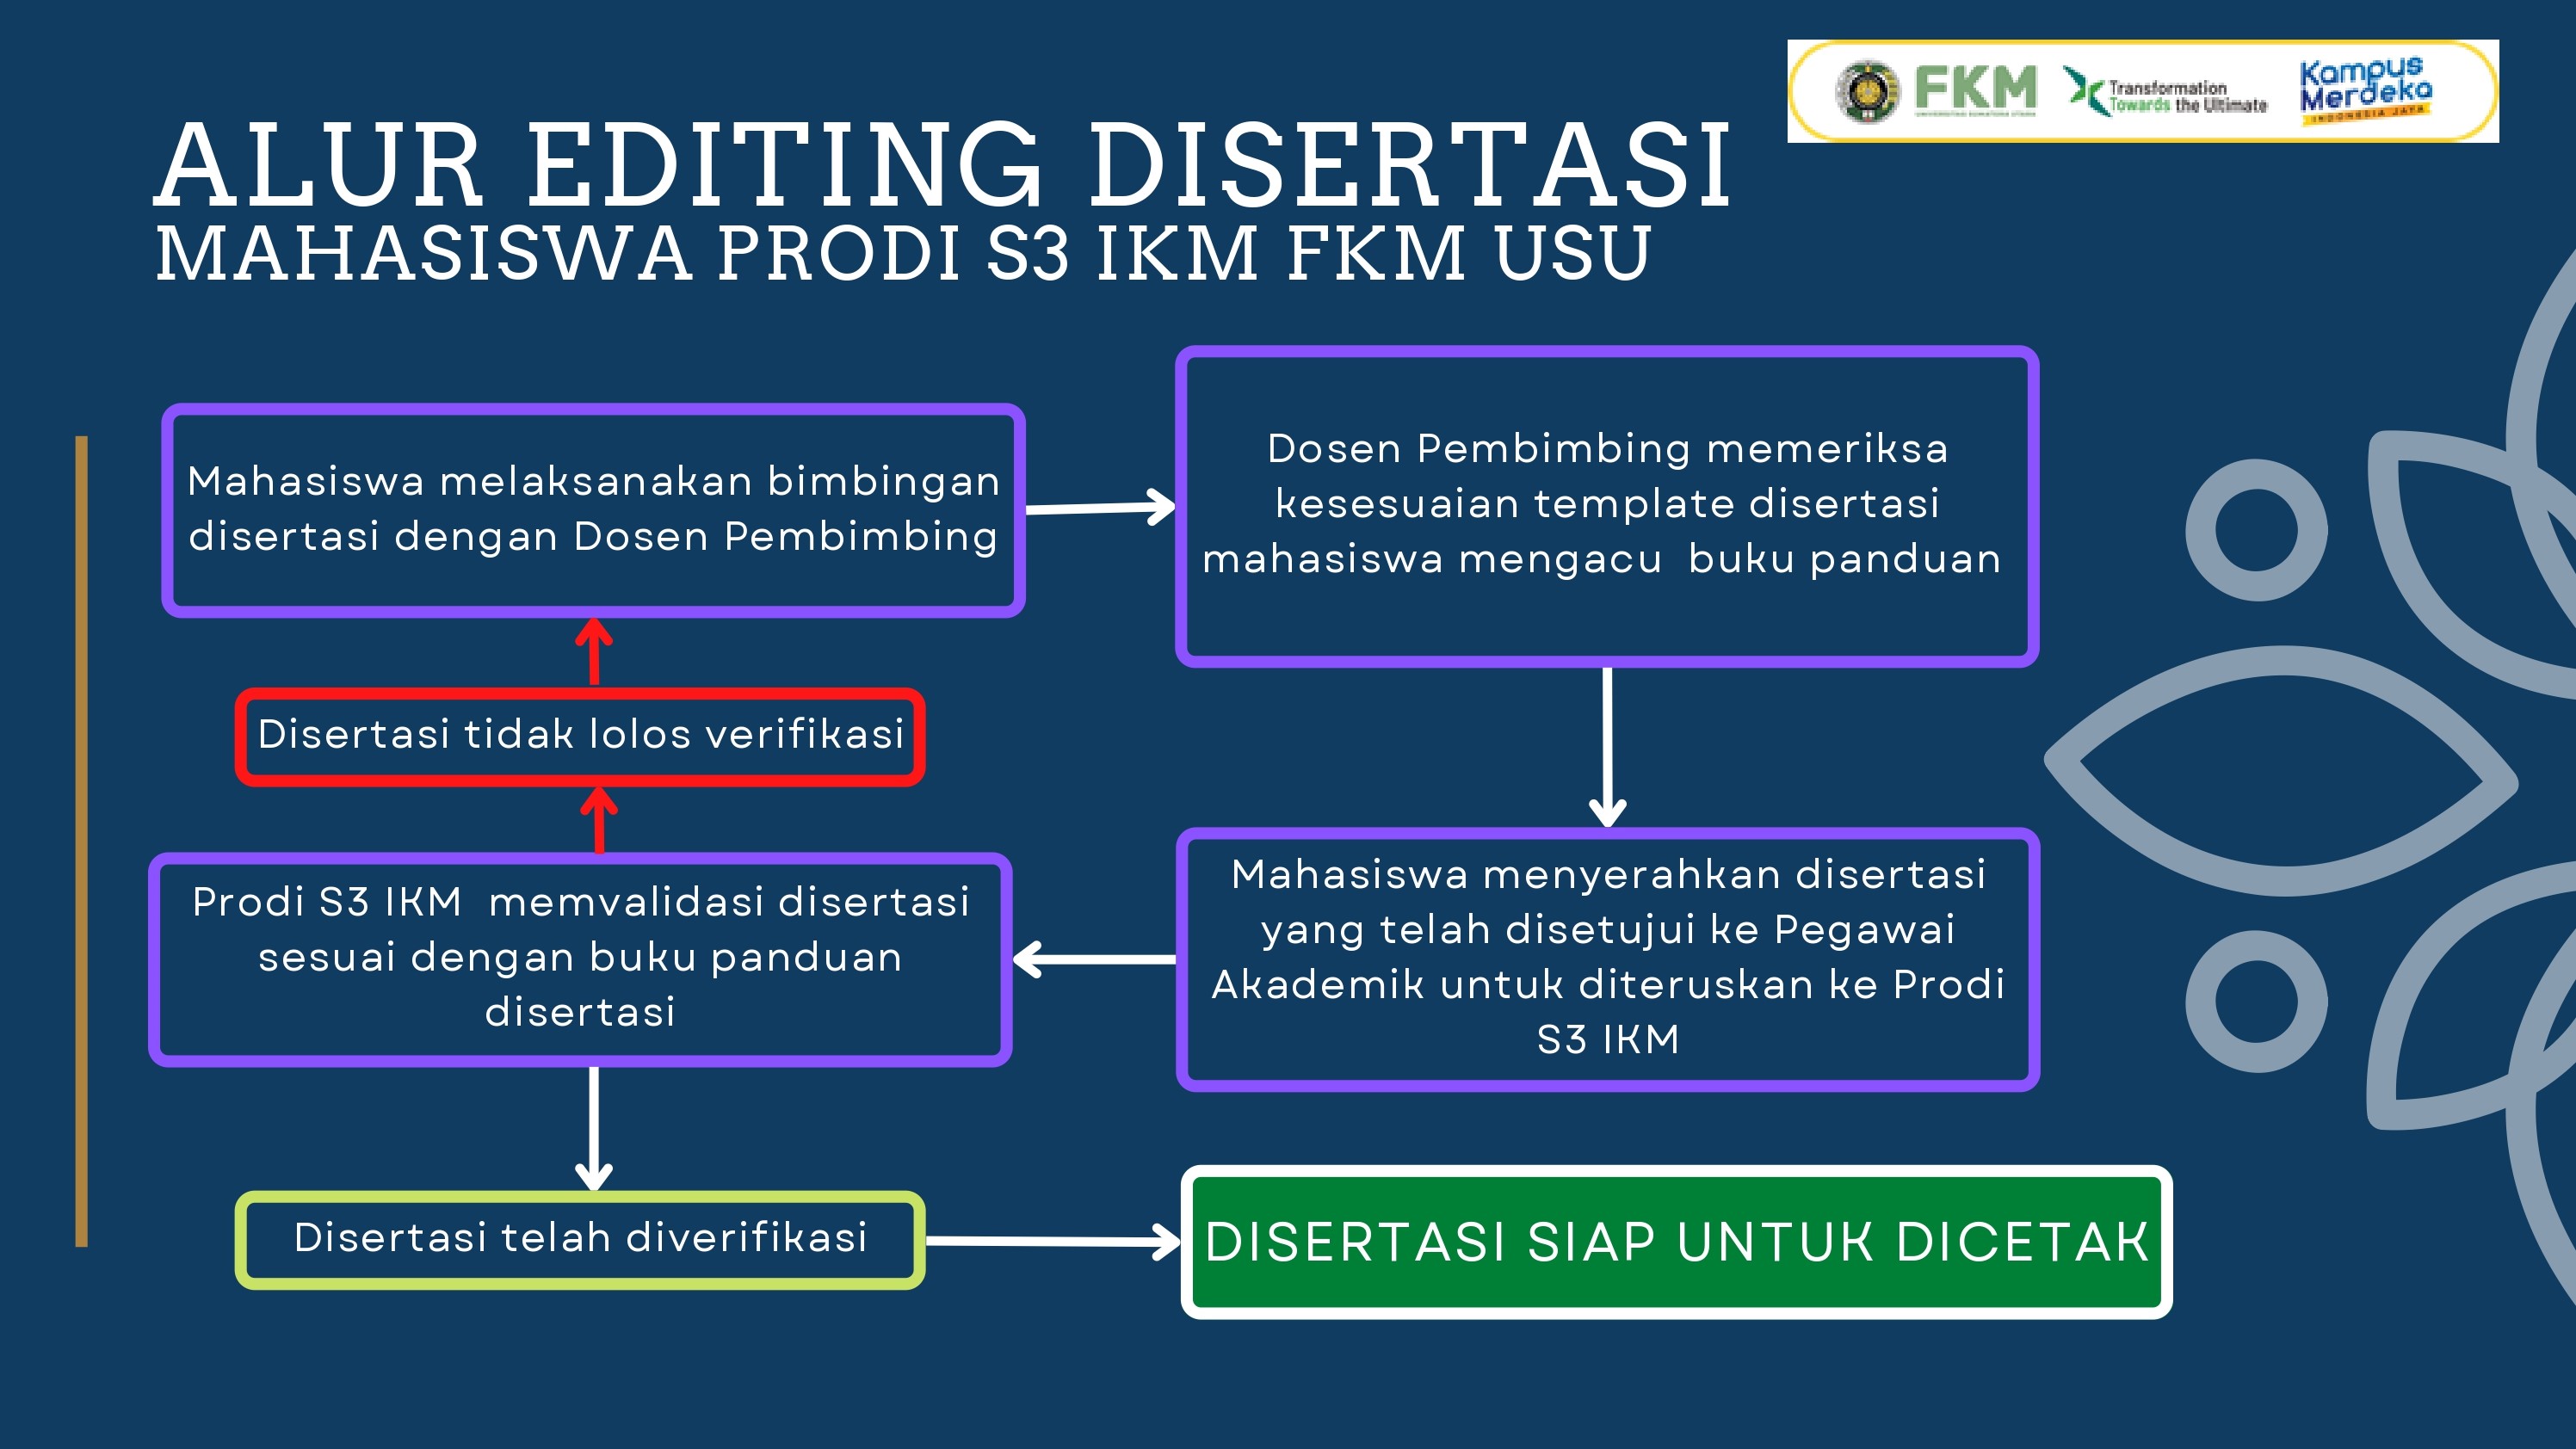 Alur Editing Disertasi Prodi S3 IKM FKM USU page 0001